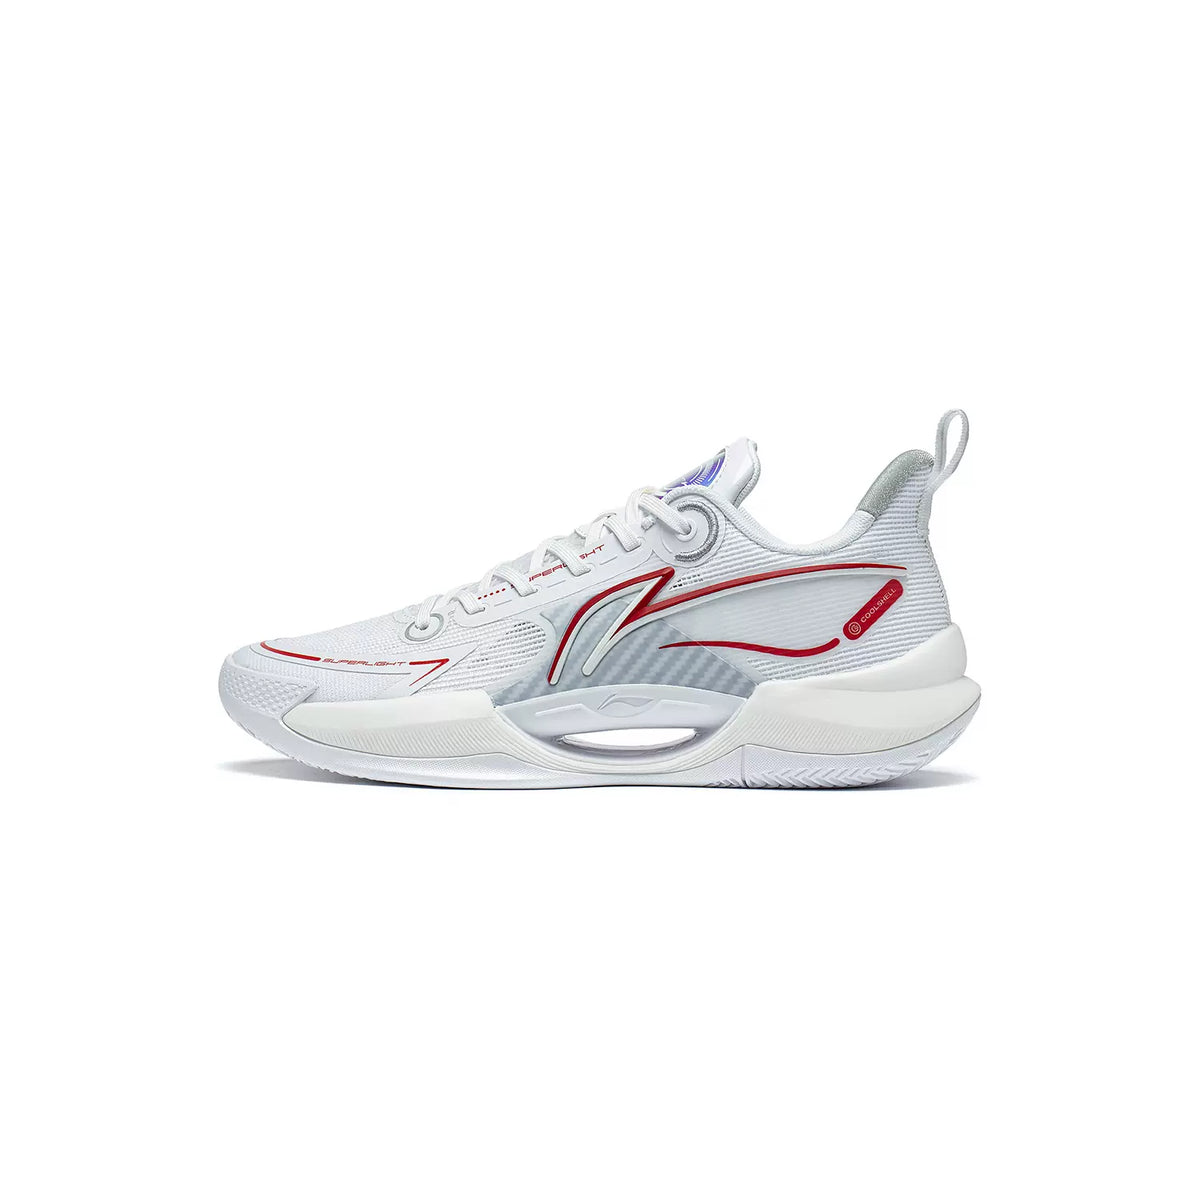 LiNing x Fred VanVleet Speed 9 Premium Boom Low Basketball Shoes